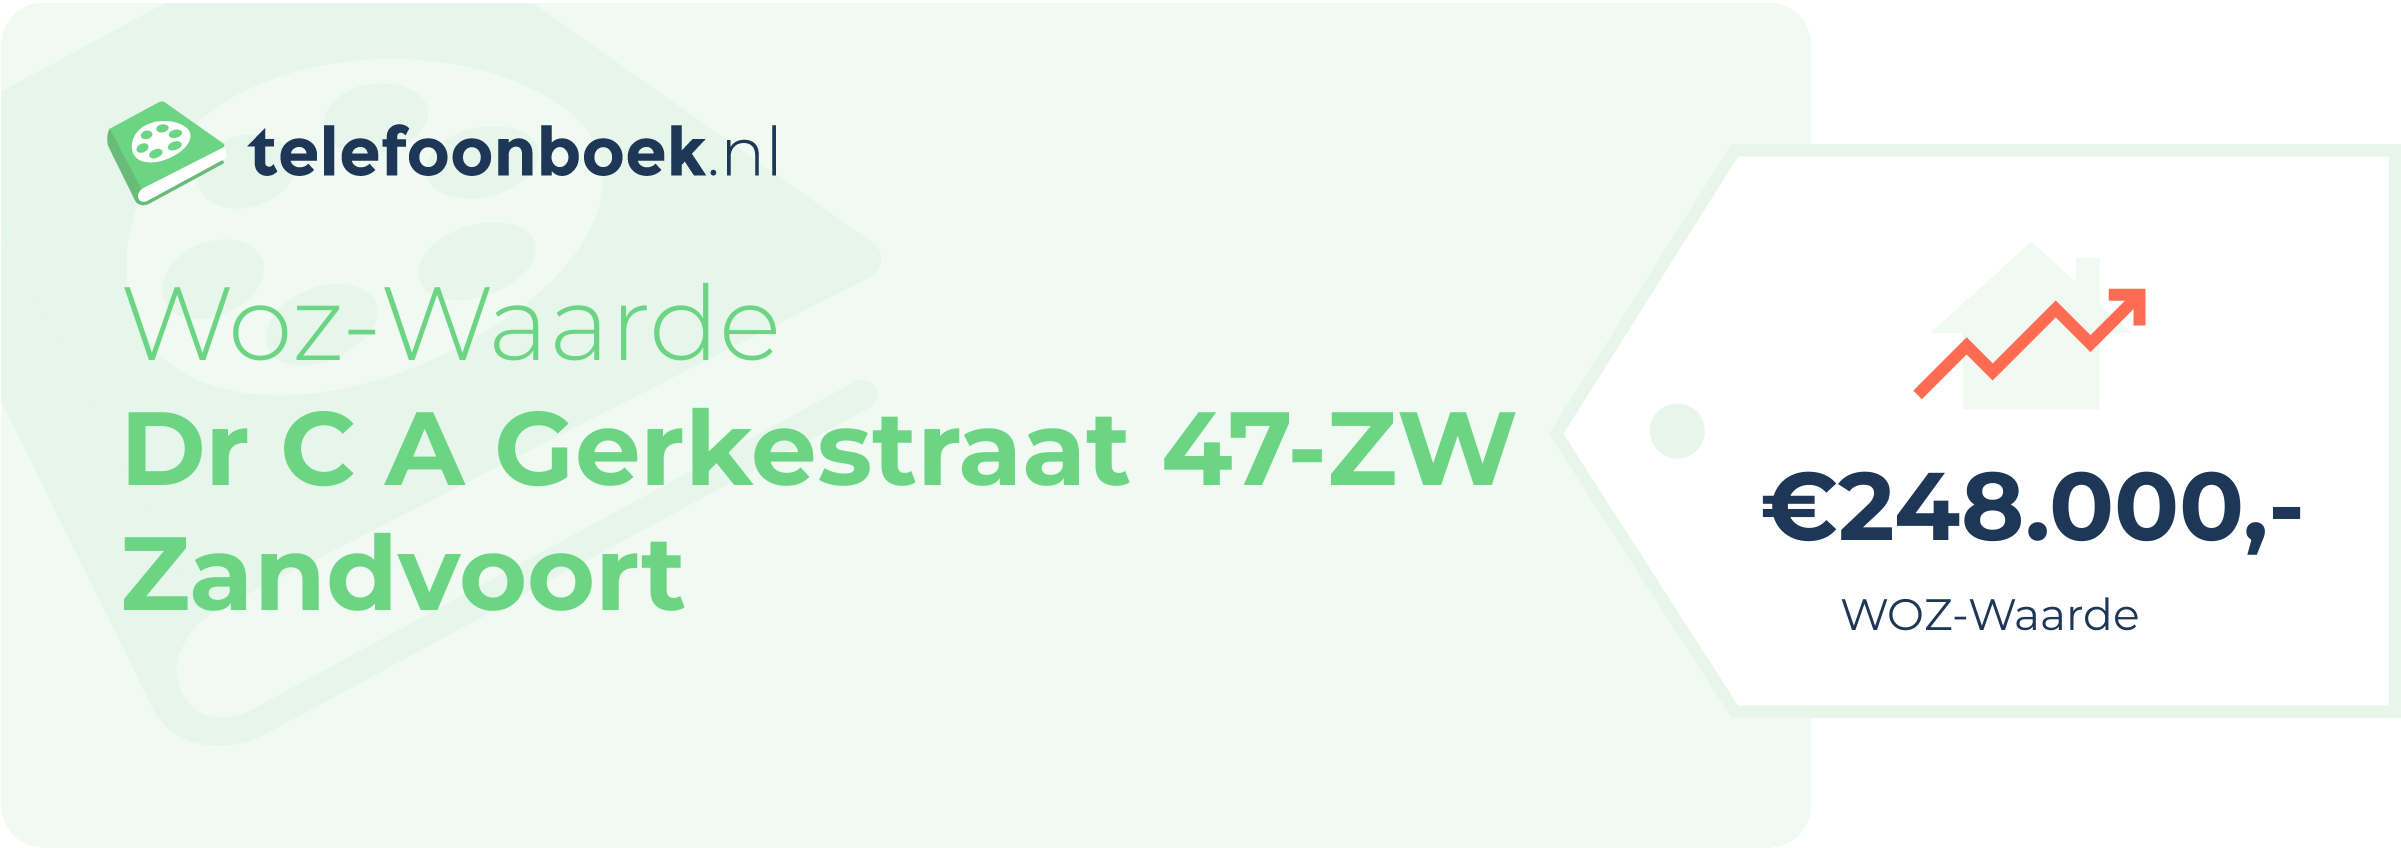 WOZ-waarde Dr C A Gerkestraat 47-ZW Zandvoort